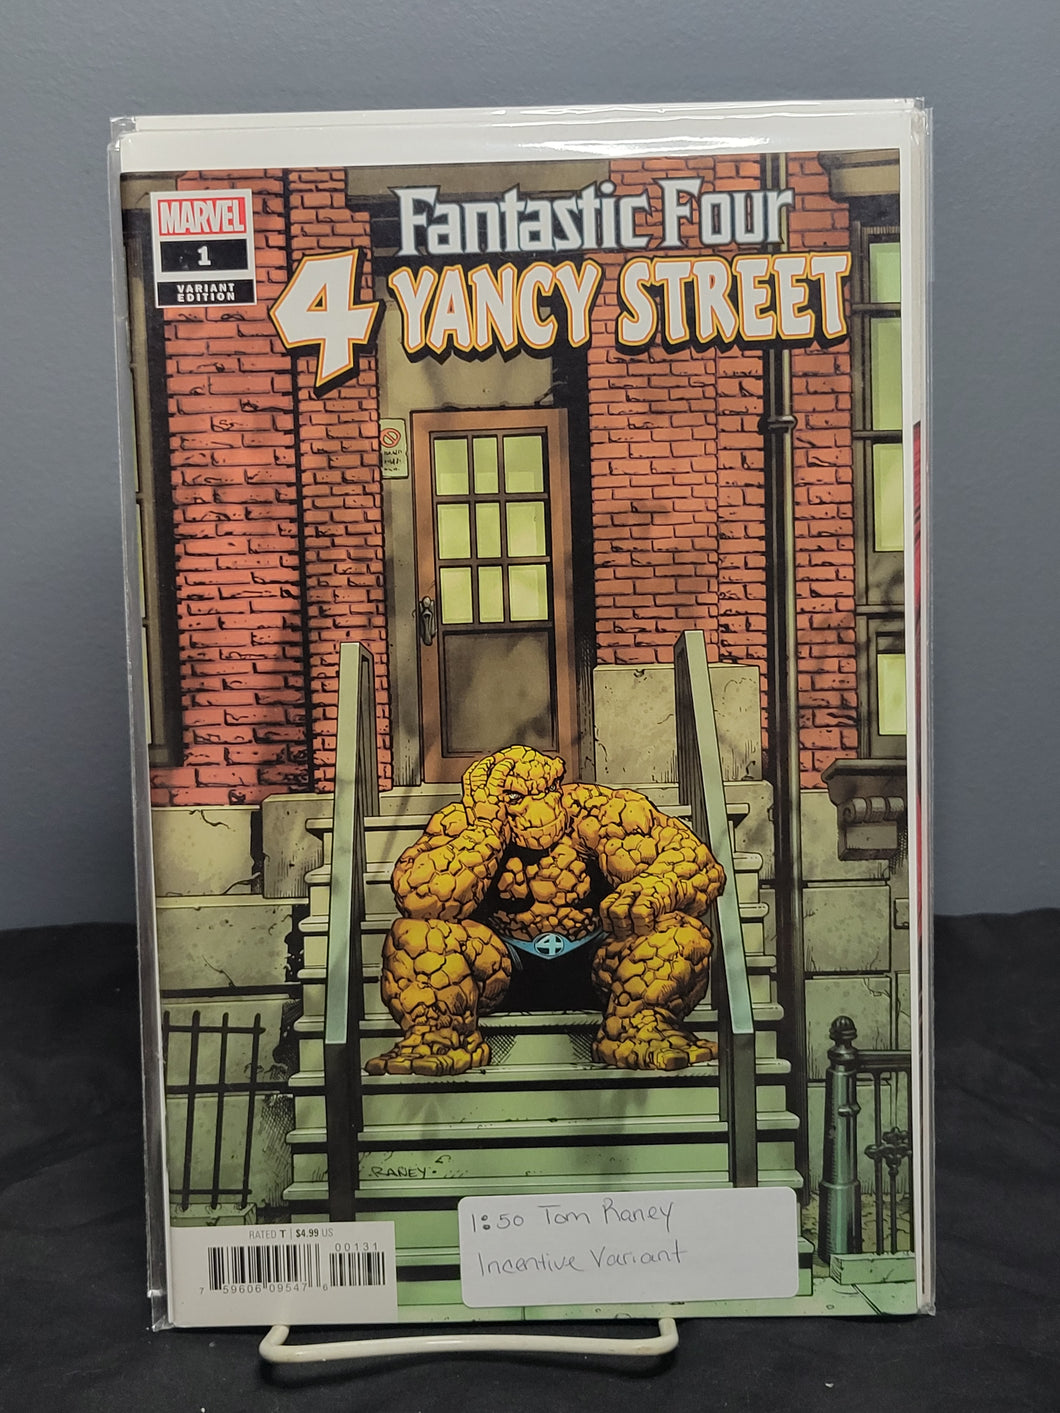 Fantastic Four 4 Yancy Street #1 1:25 Variant